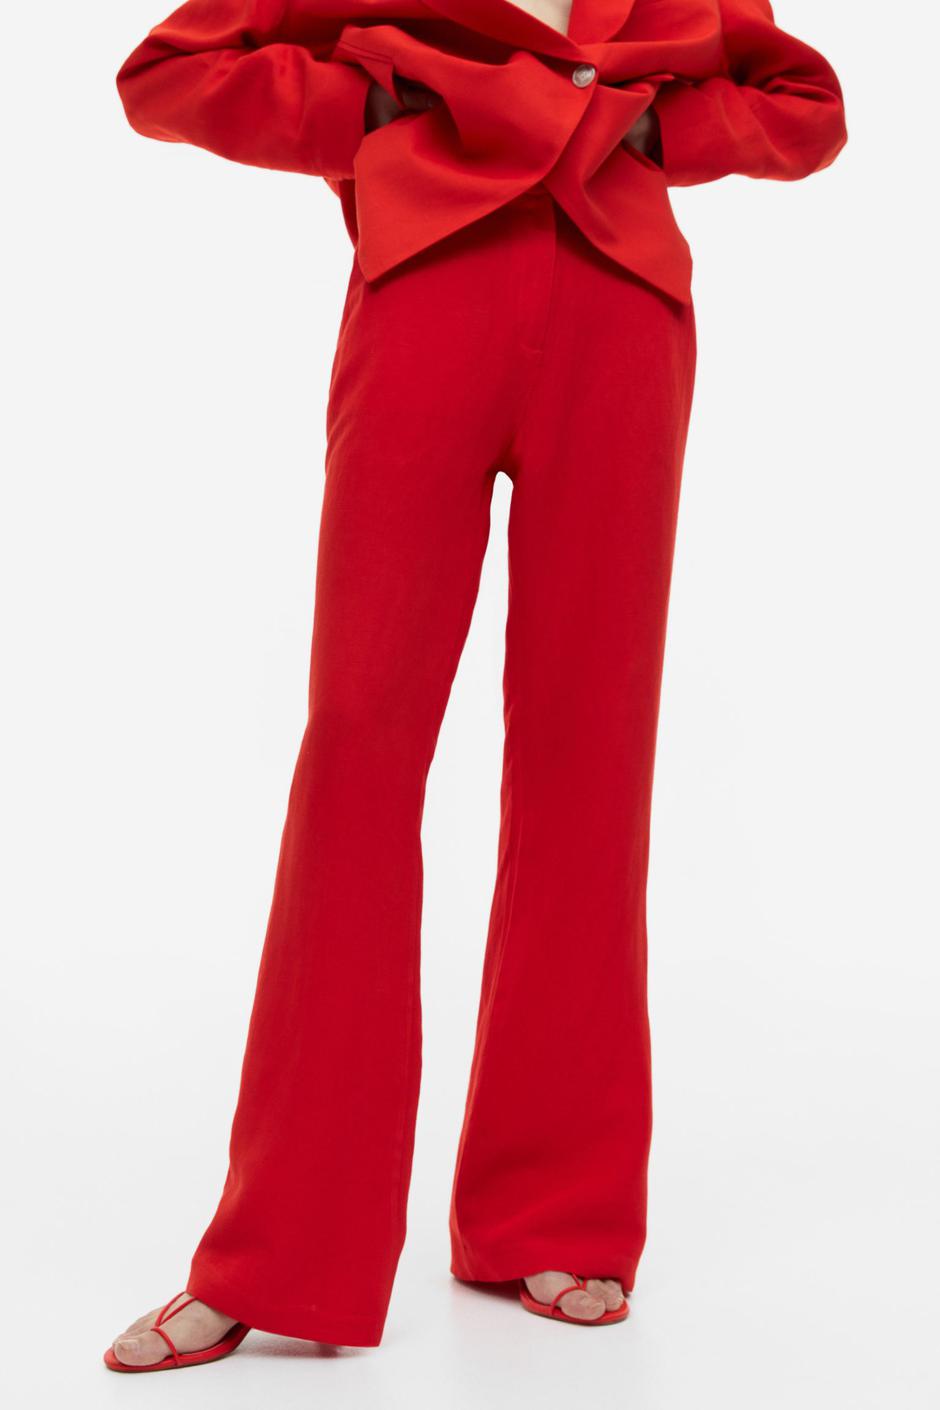 Foto: H&M, duge crvene hlače (30,99 eura) | Autor: 